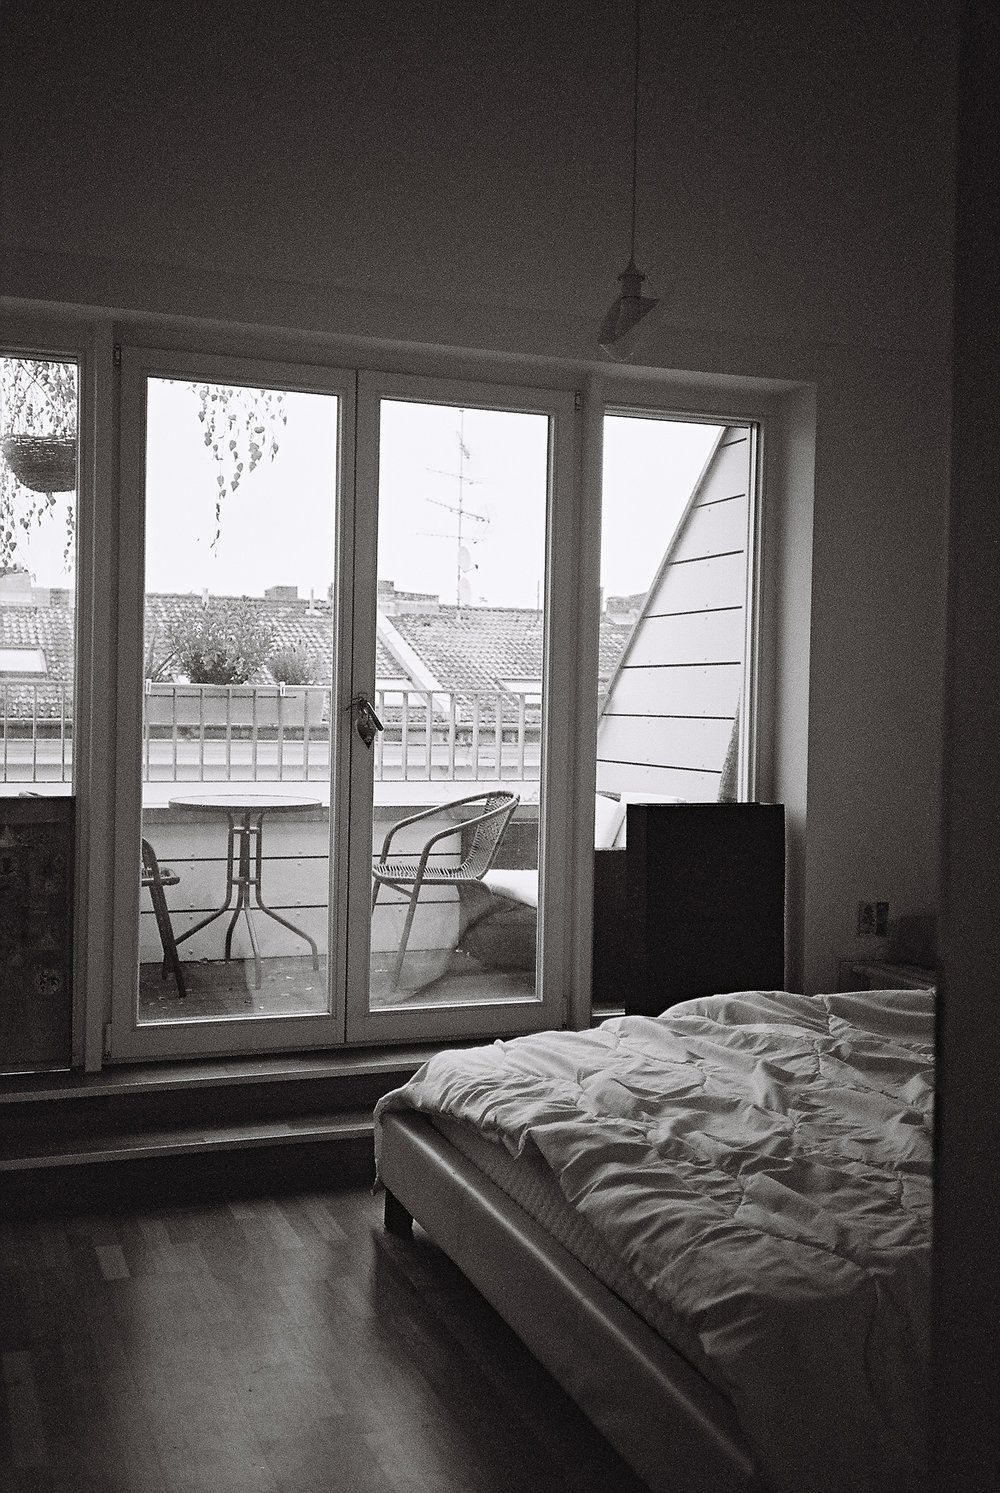  the room i rented via airbnb in kreuzberg. 